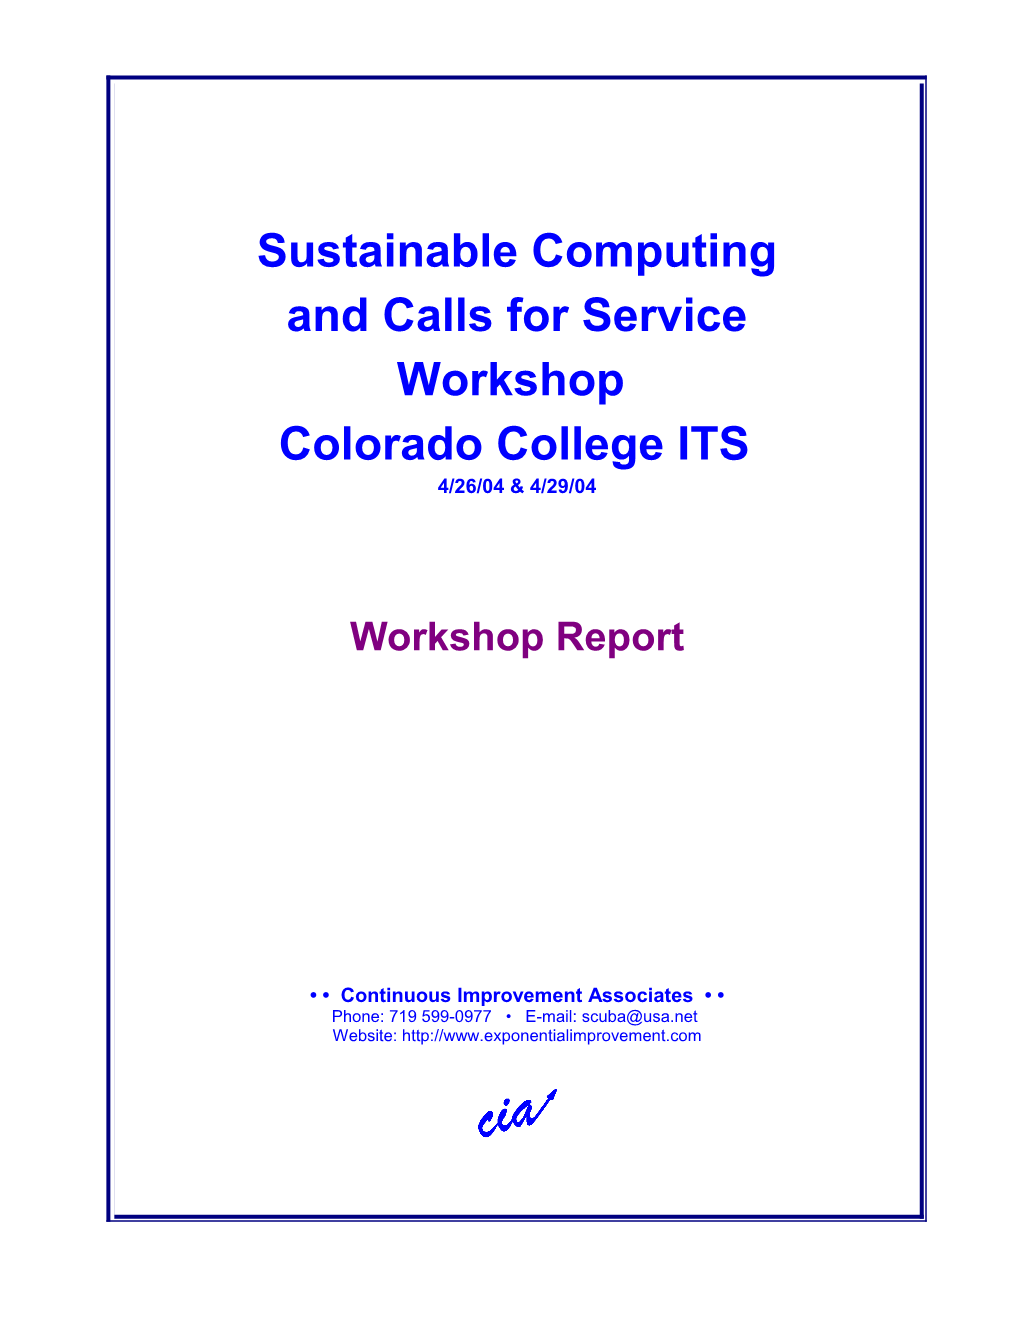 Facilitating Group Action at Colorado College